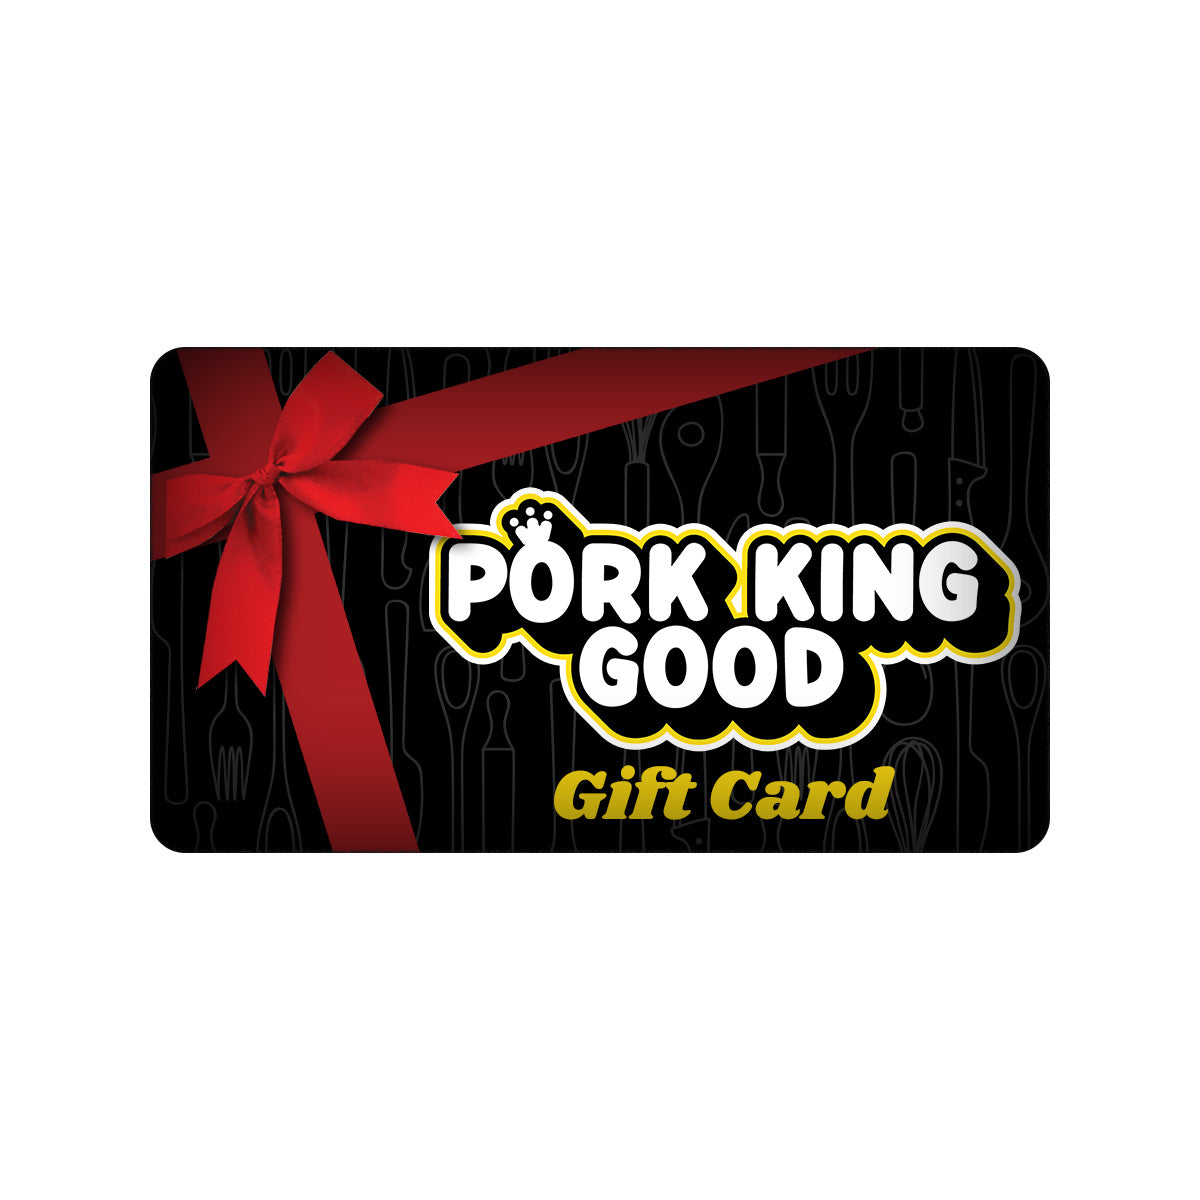 Pork King Good Gift Cards - Pork King Good